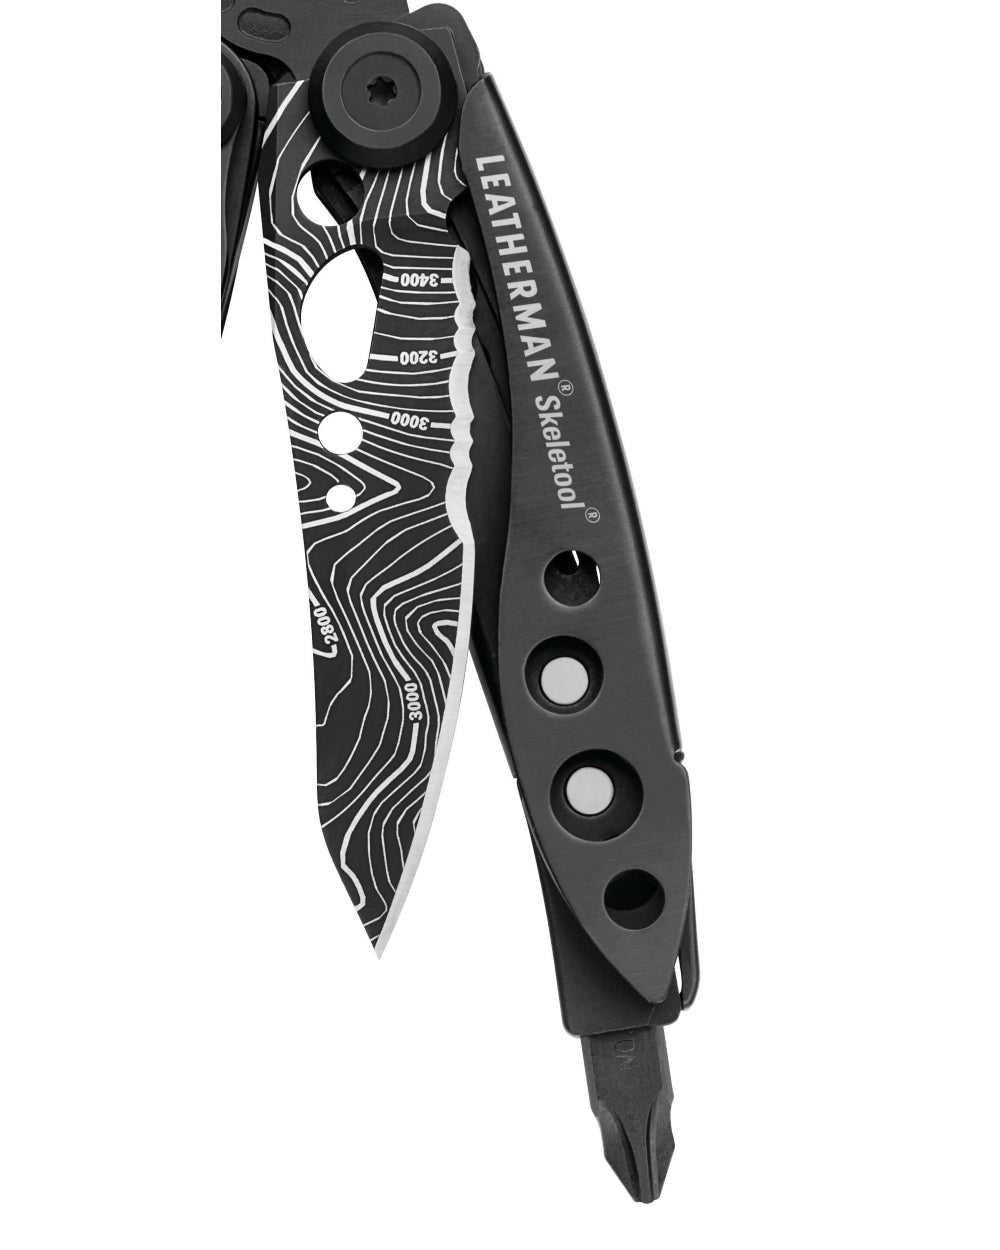 Leatherman Skeletool Pocket Multi-Tool in Topographical Black 